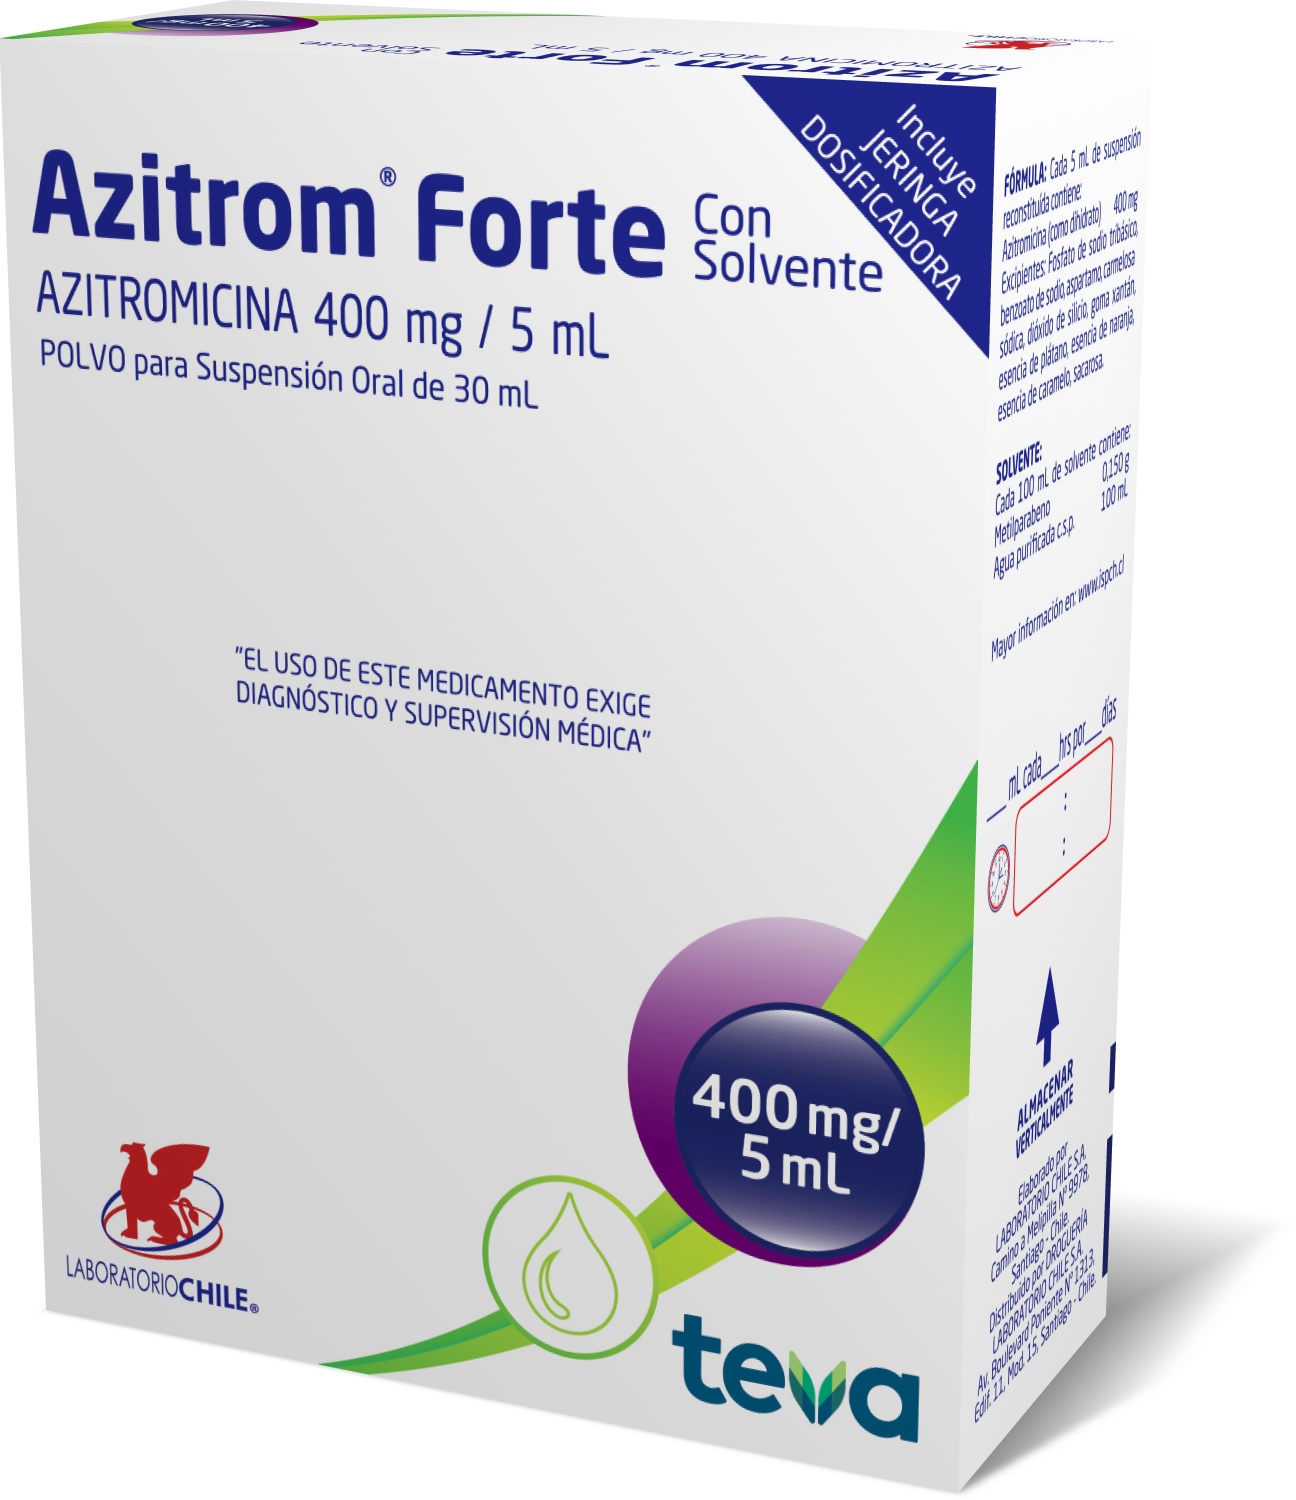 Azitrom Forte 400 mg / 5 mL